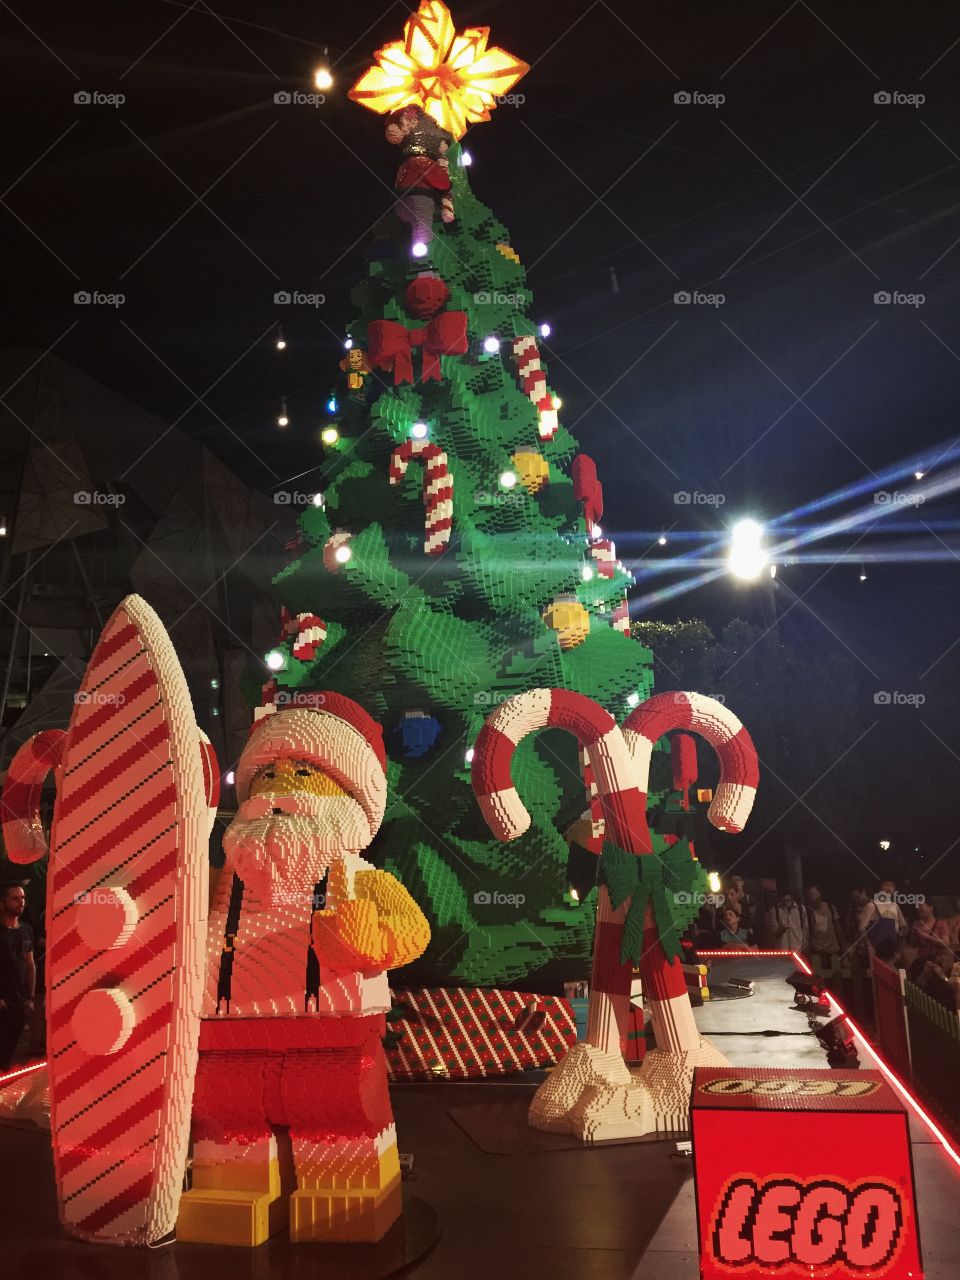 Melbourne Christmas Decorations (2015)